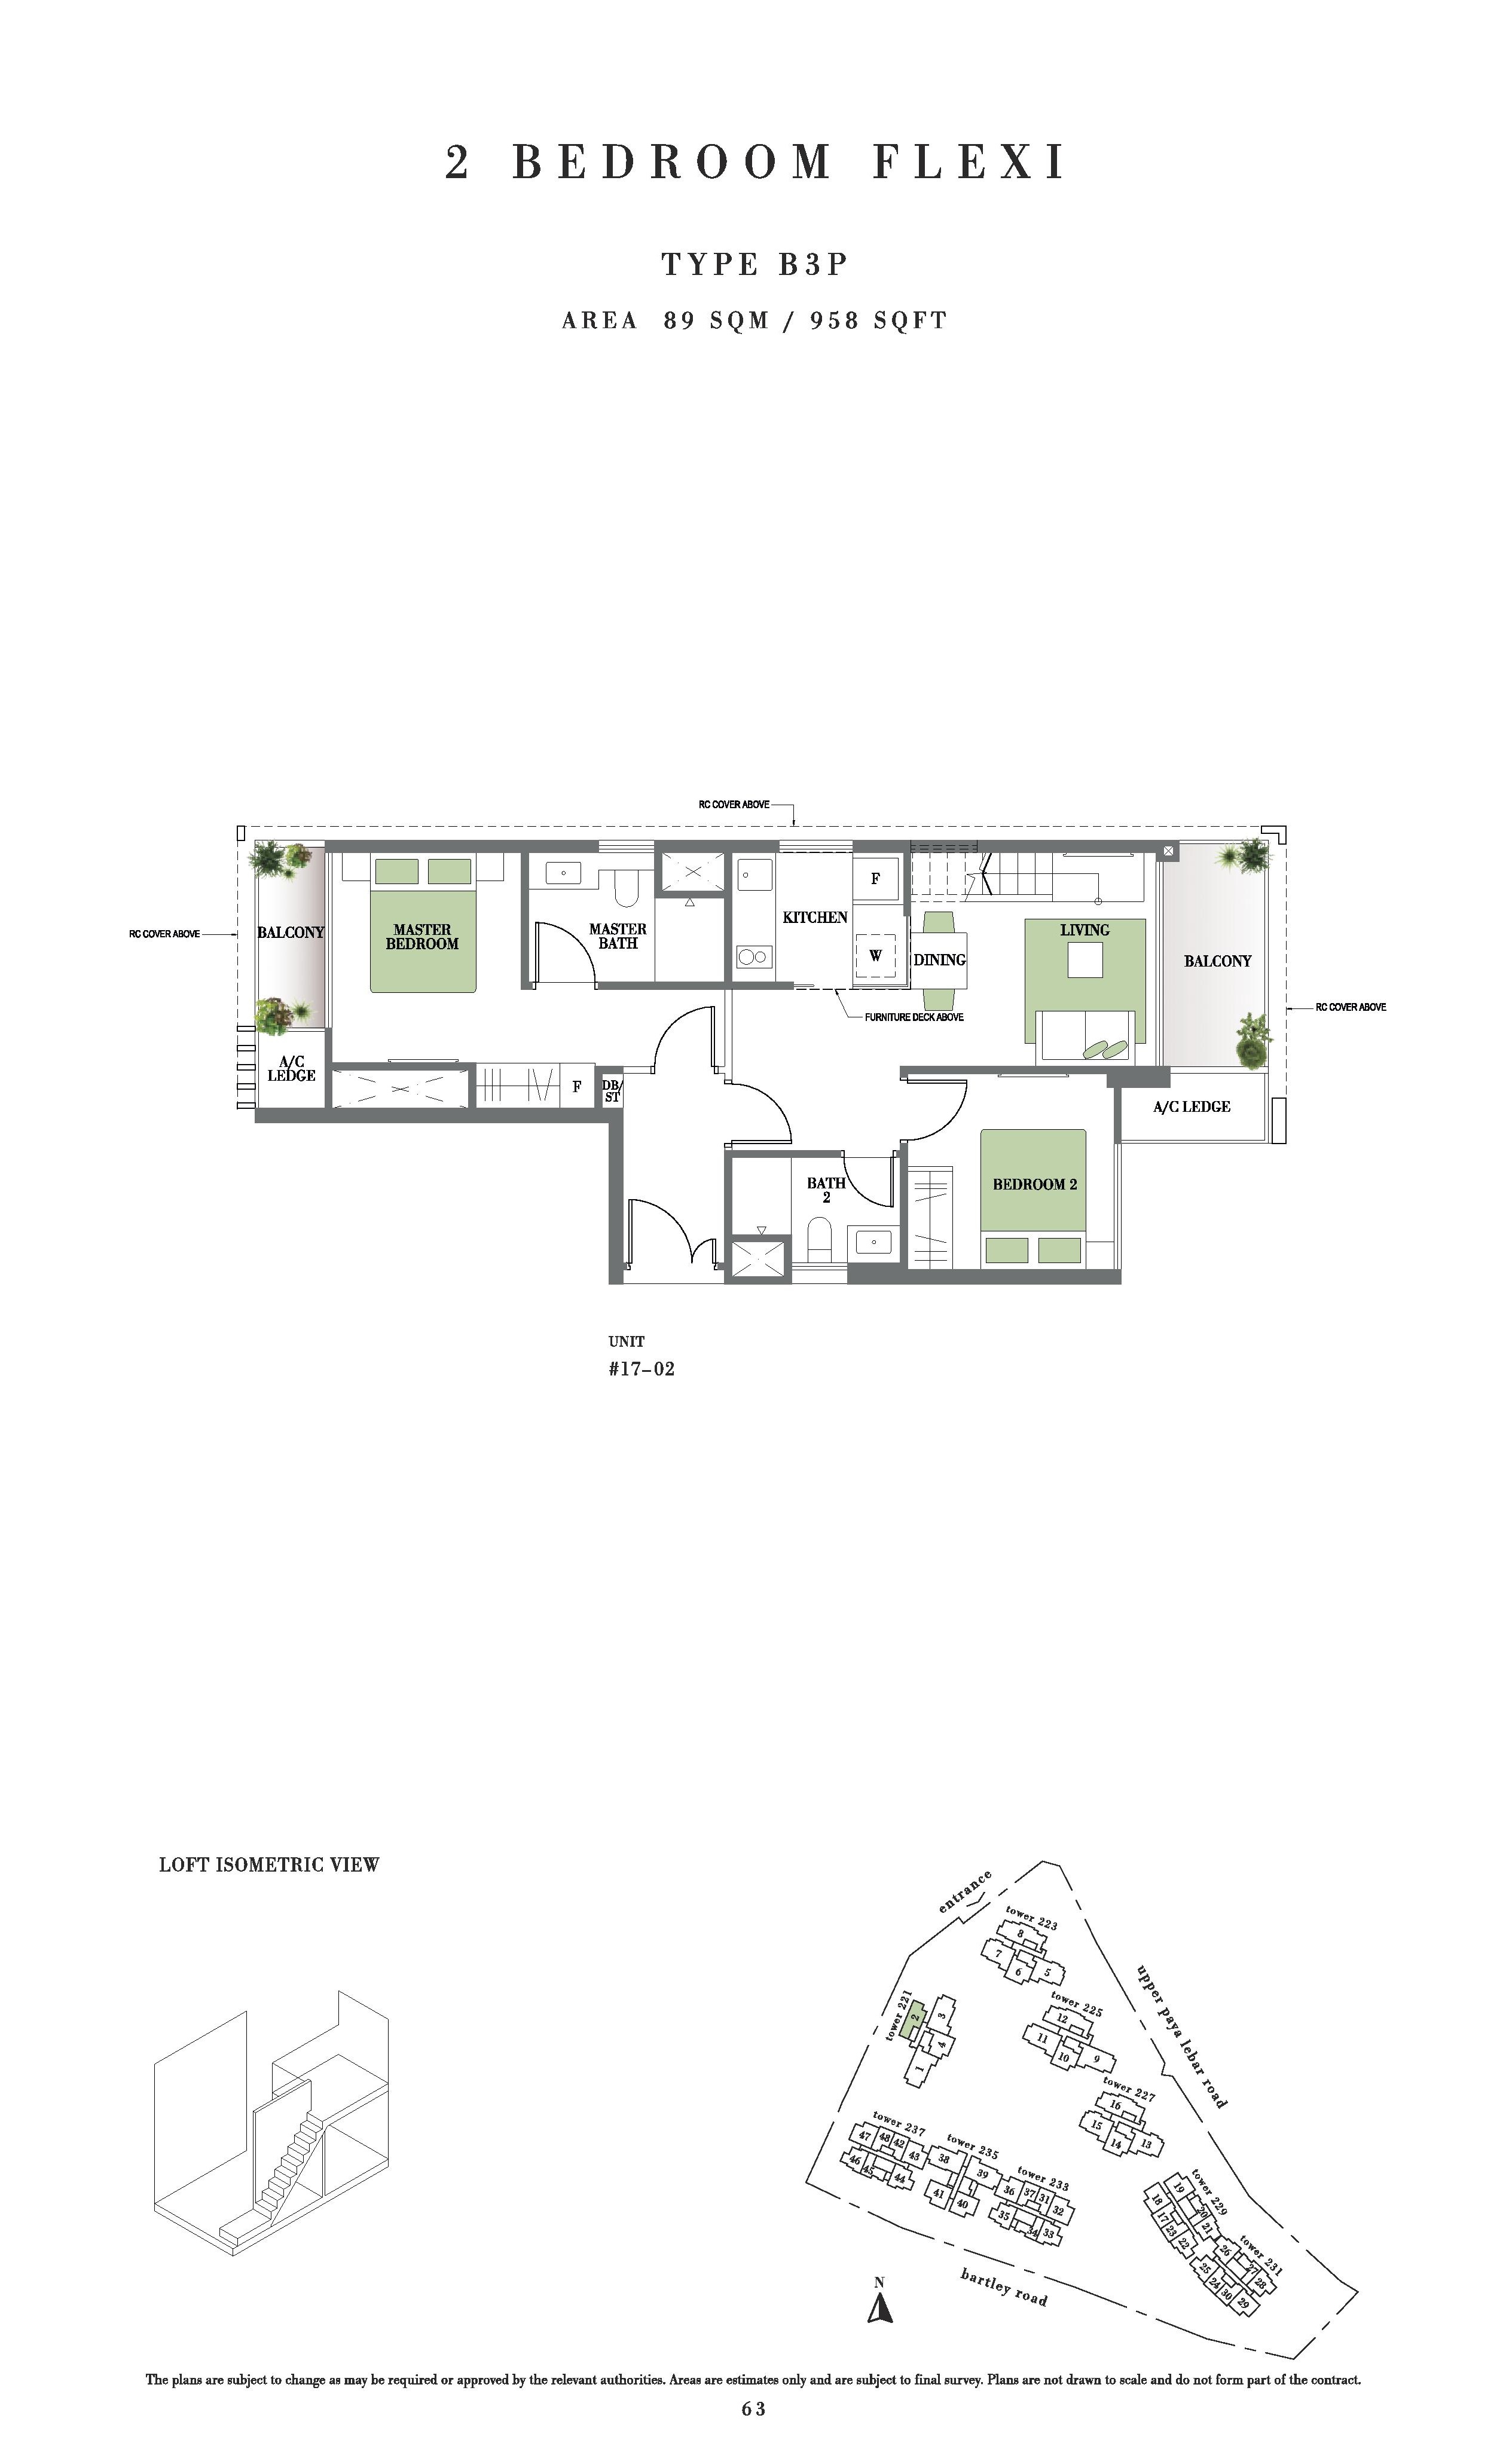 Botanique @ Bartley 2 Bedroom Flexi Floor Plans Type B3P